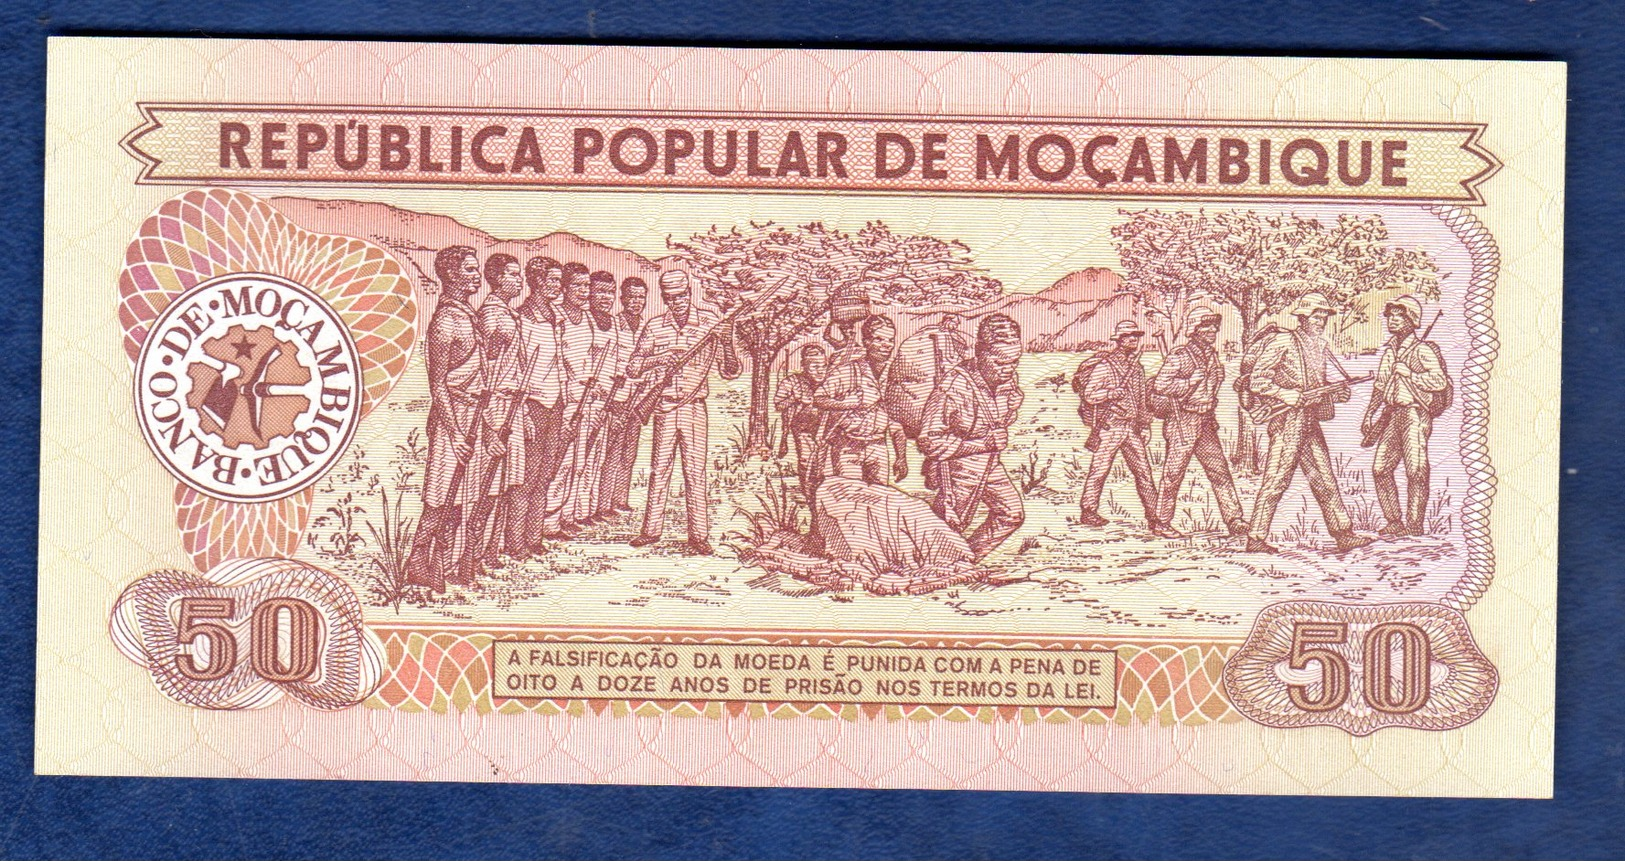 Mozambico - 1986 - Banconota Da 50 Metical  UNC - Mozambique